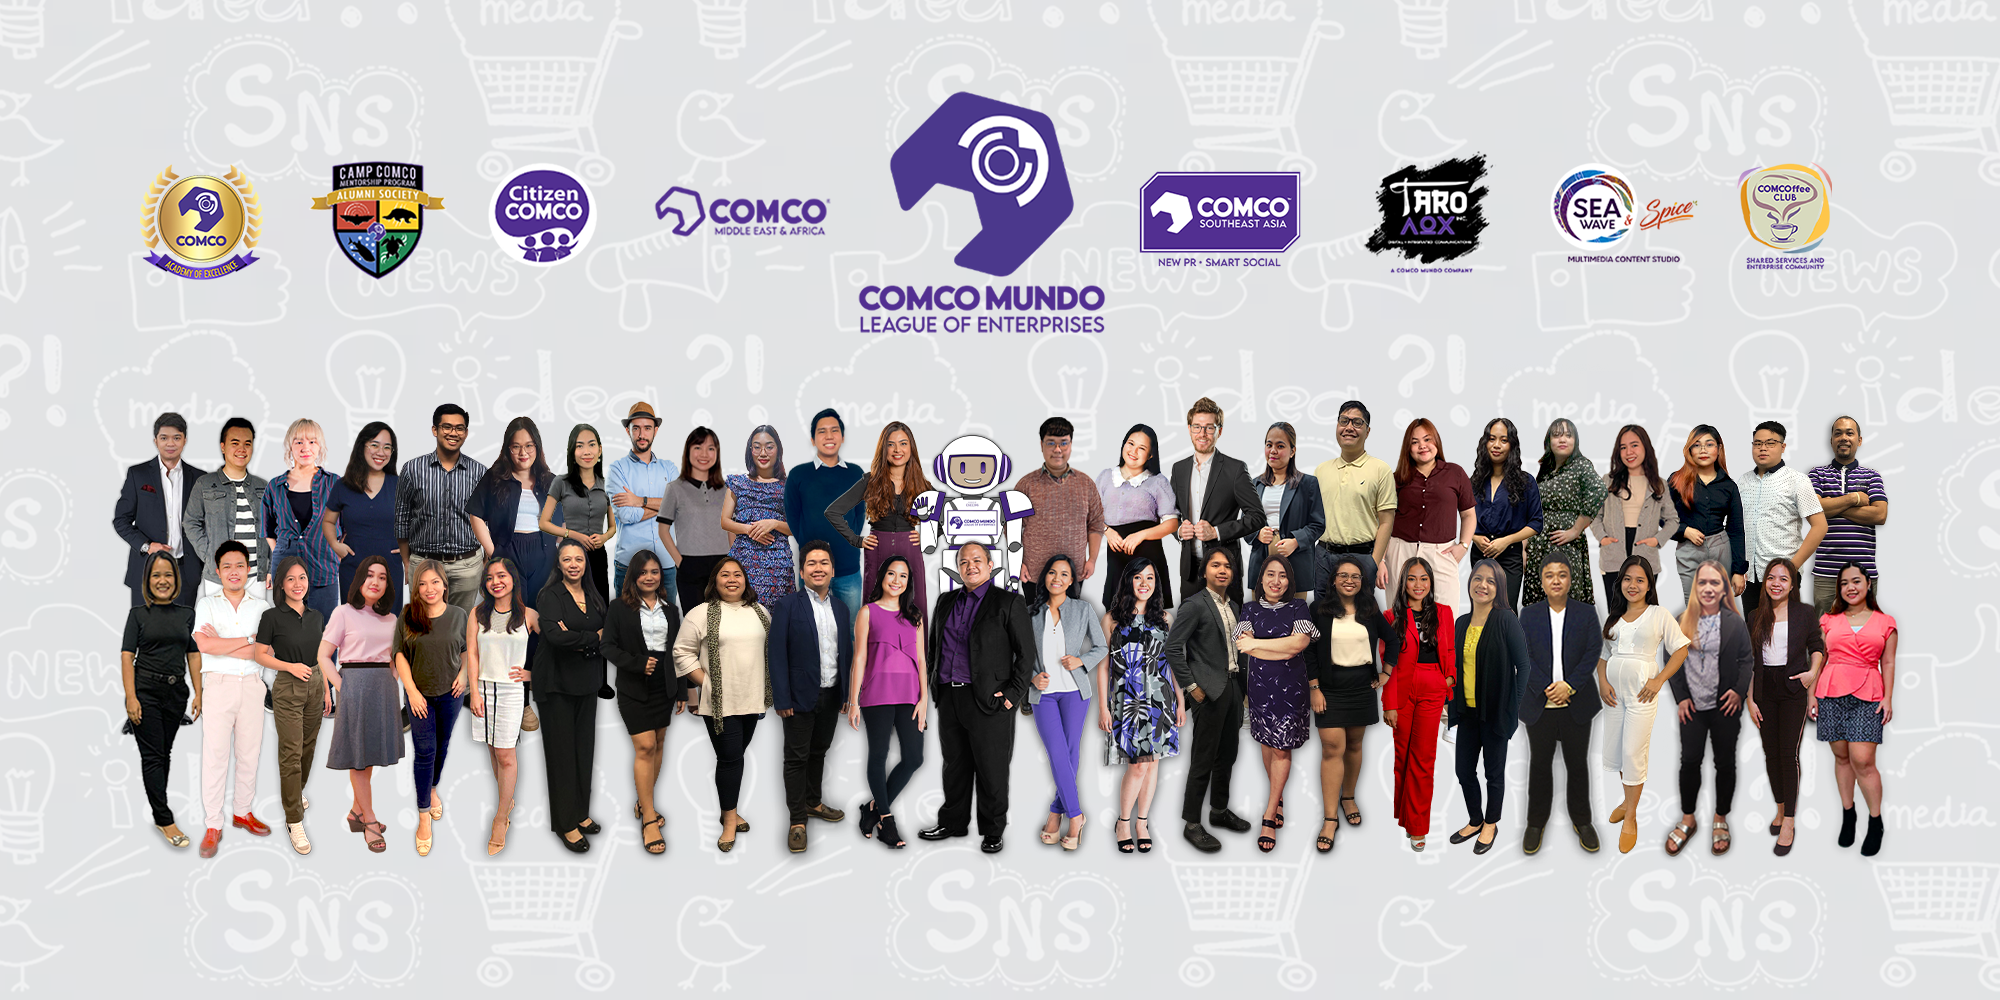 COMCO Mundo Directors New PR Smart Social BEst Agency